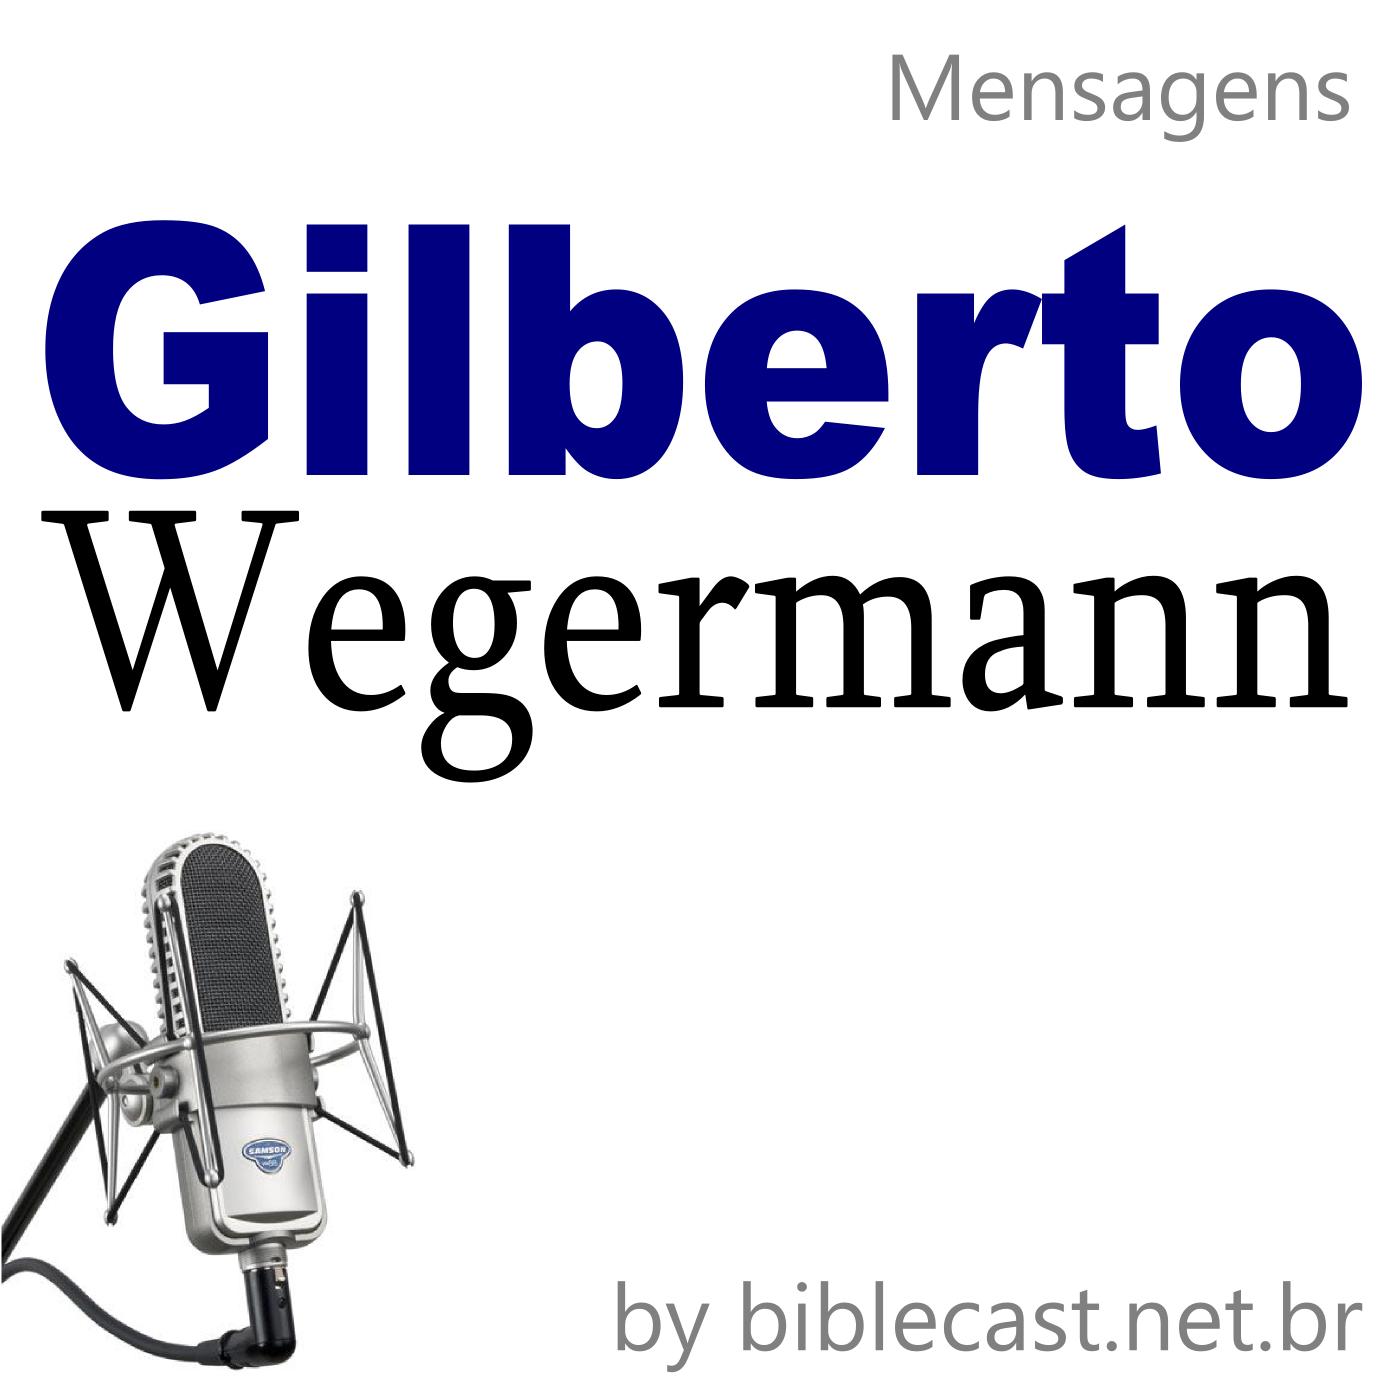 Pr. Gilberto Wegermann (arquivo)